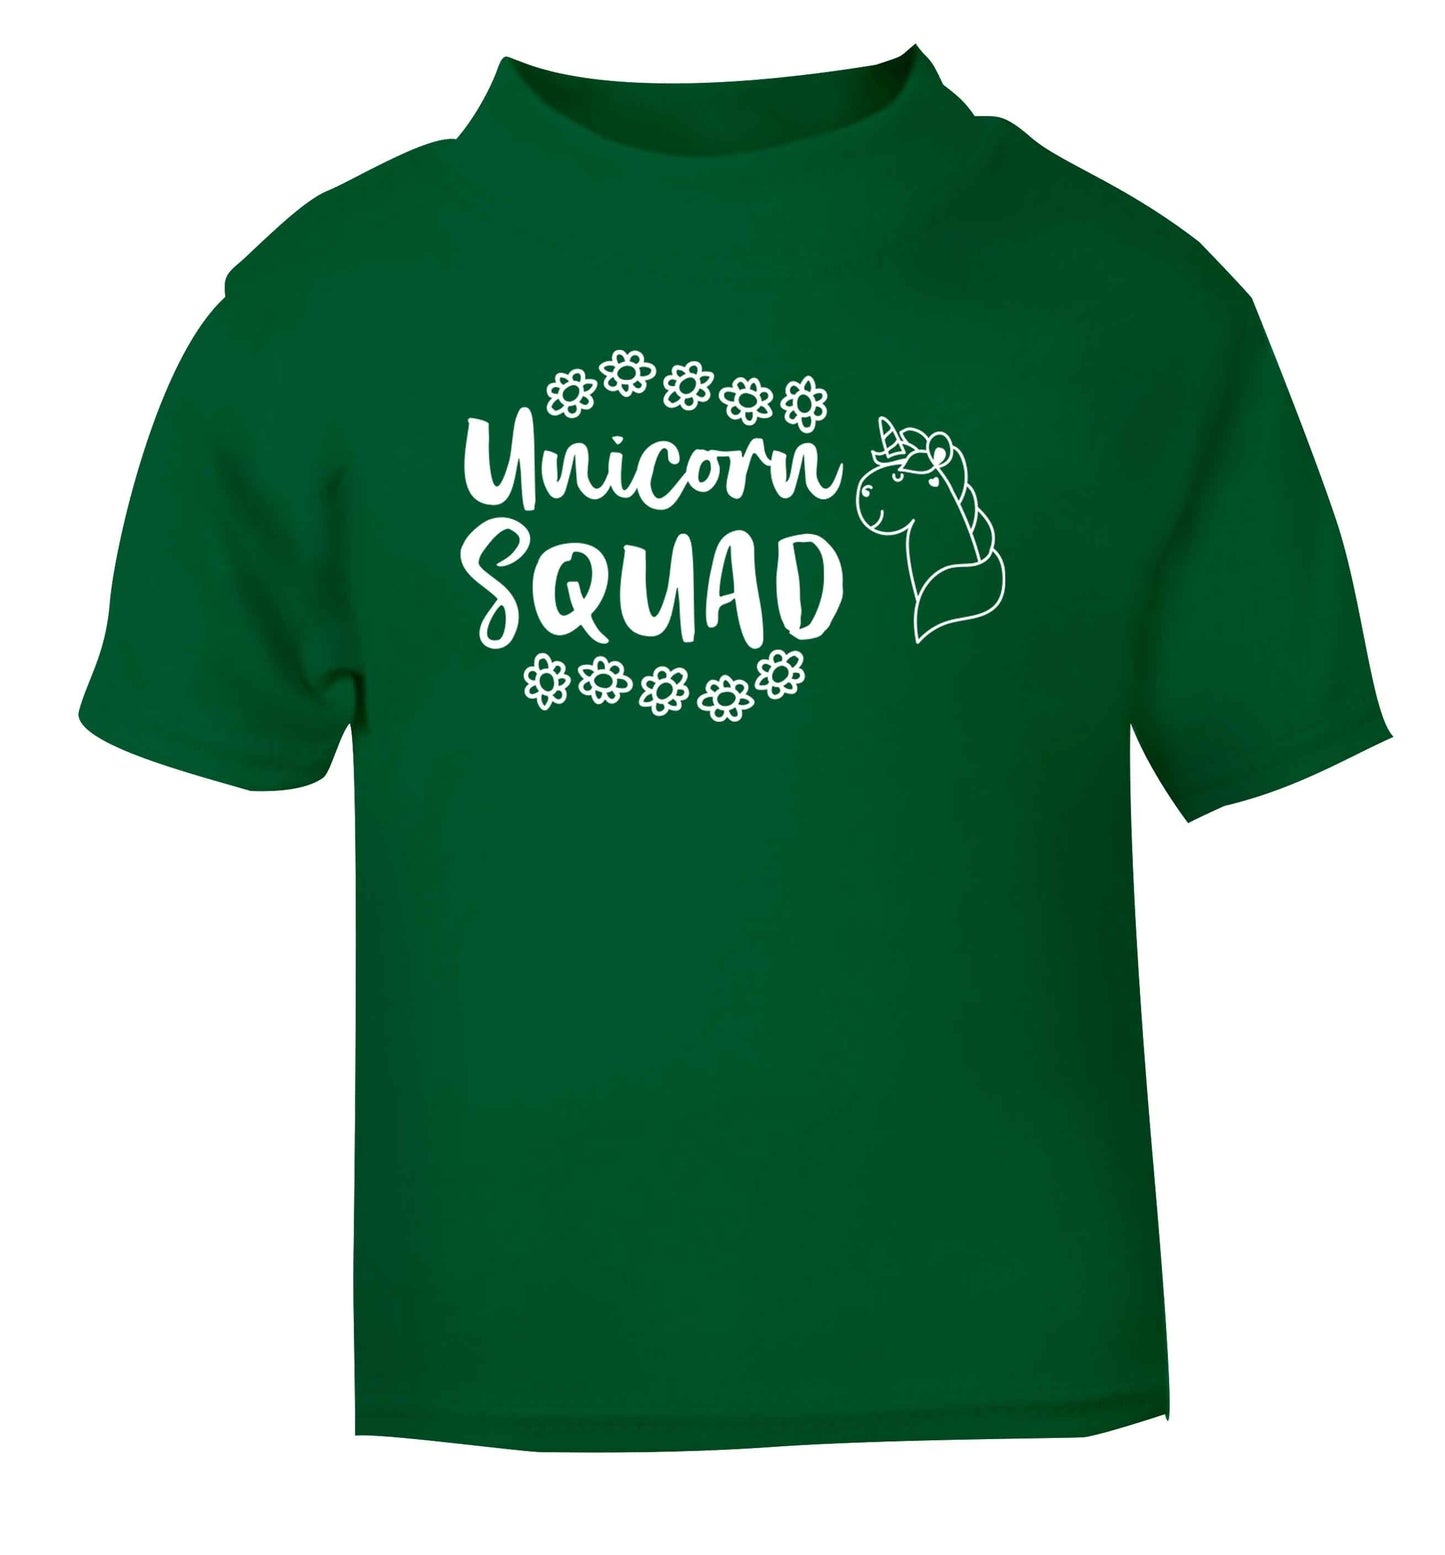 Unicorn Squad green Baby Toddler Tshirt 2 Years